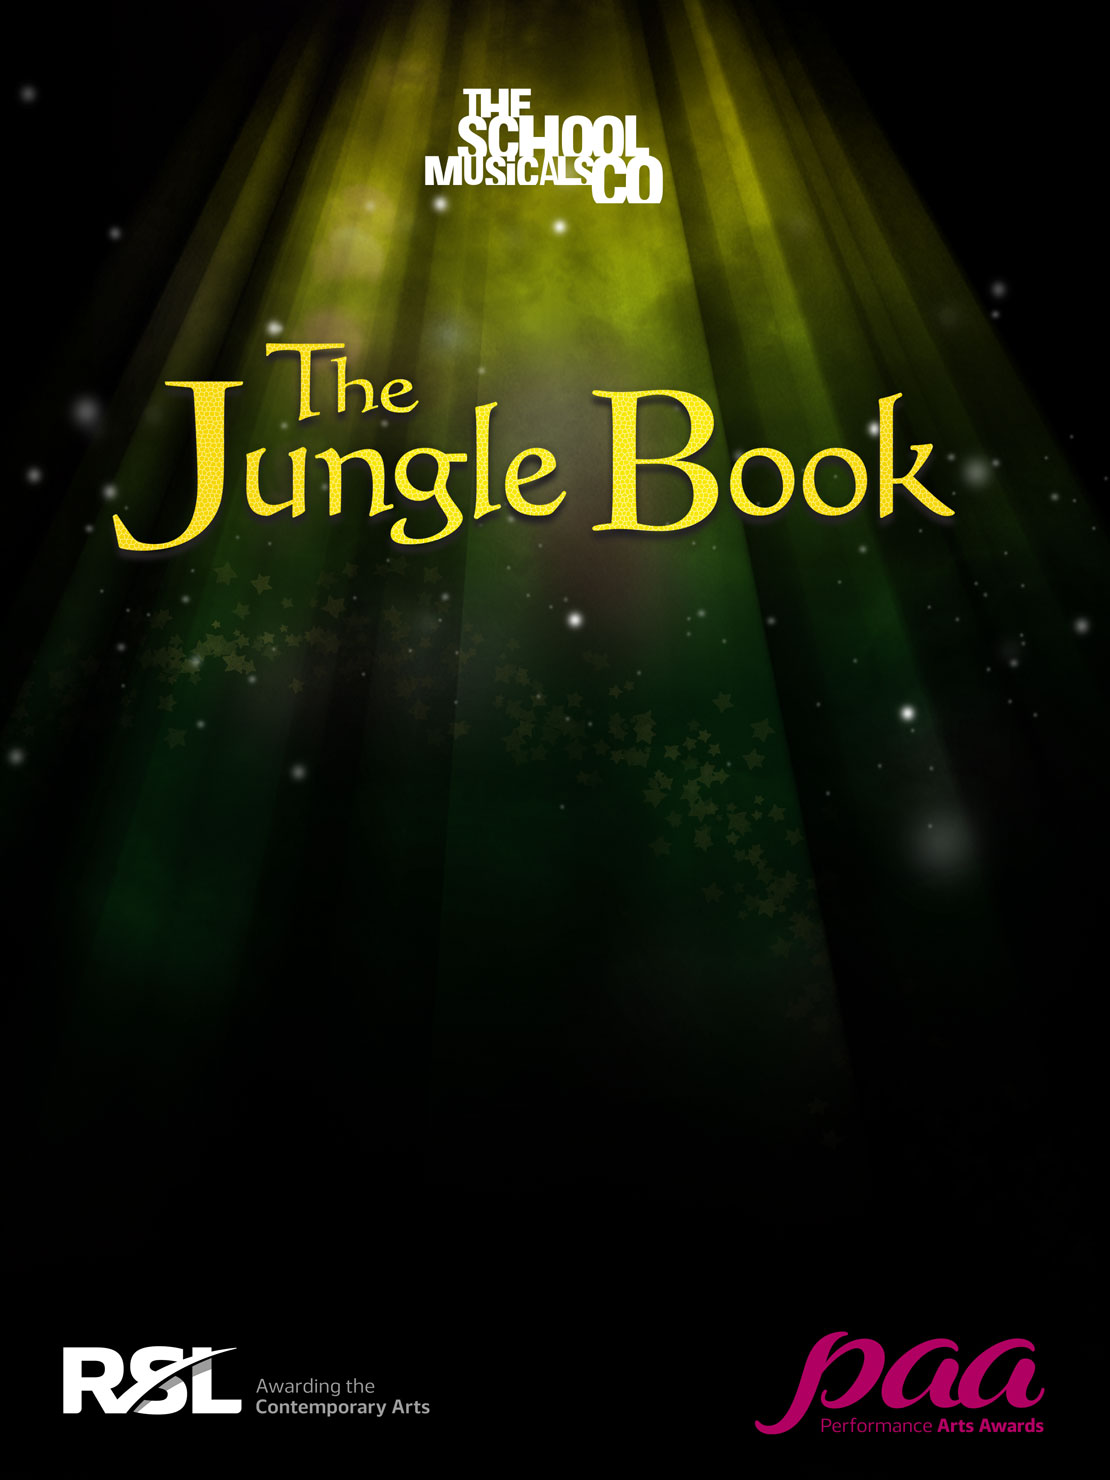 Rockschool - Shop - The Jungle Book | RSL